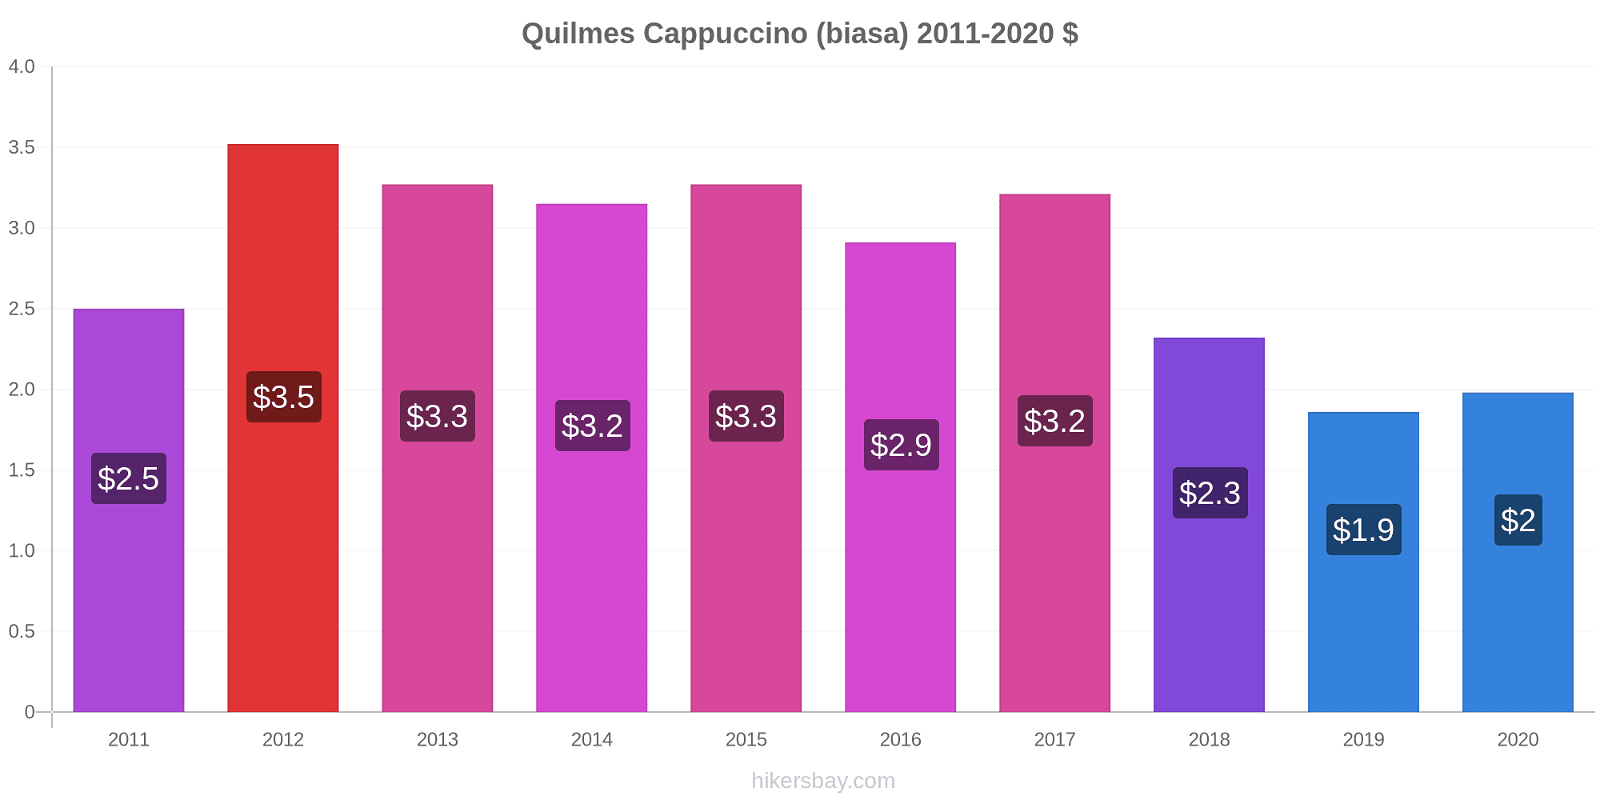 Quilmes perubahan harga Cappuccino (biasa) hikersbay.com